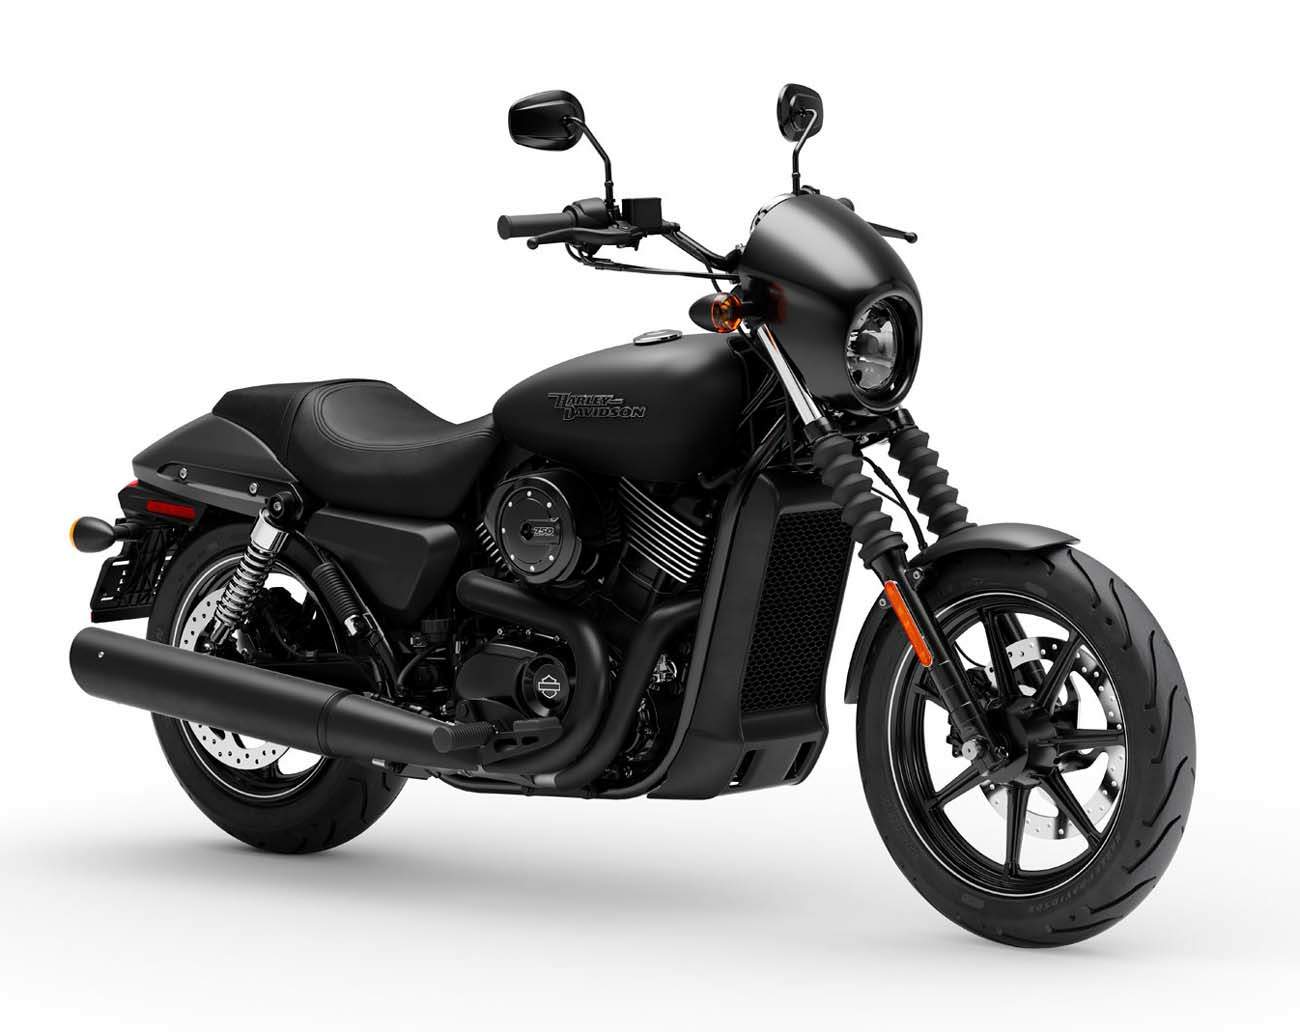 Harley-Davidson Harley Davidson XG 750 Street (2020) especificaciones técnicas